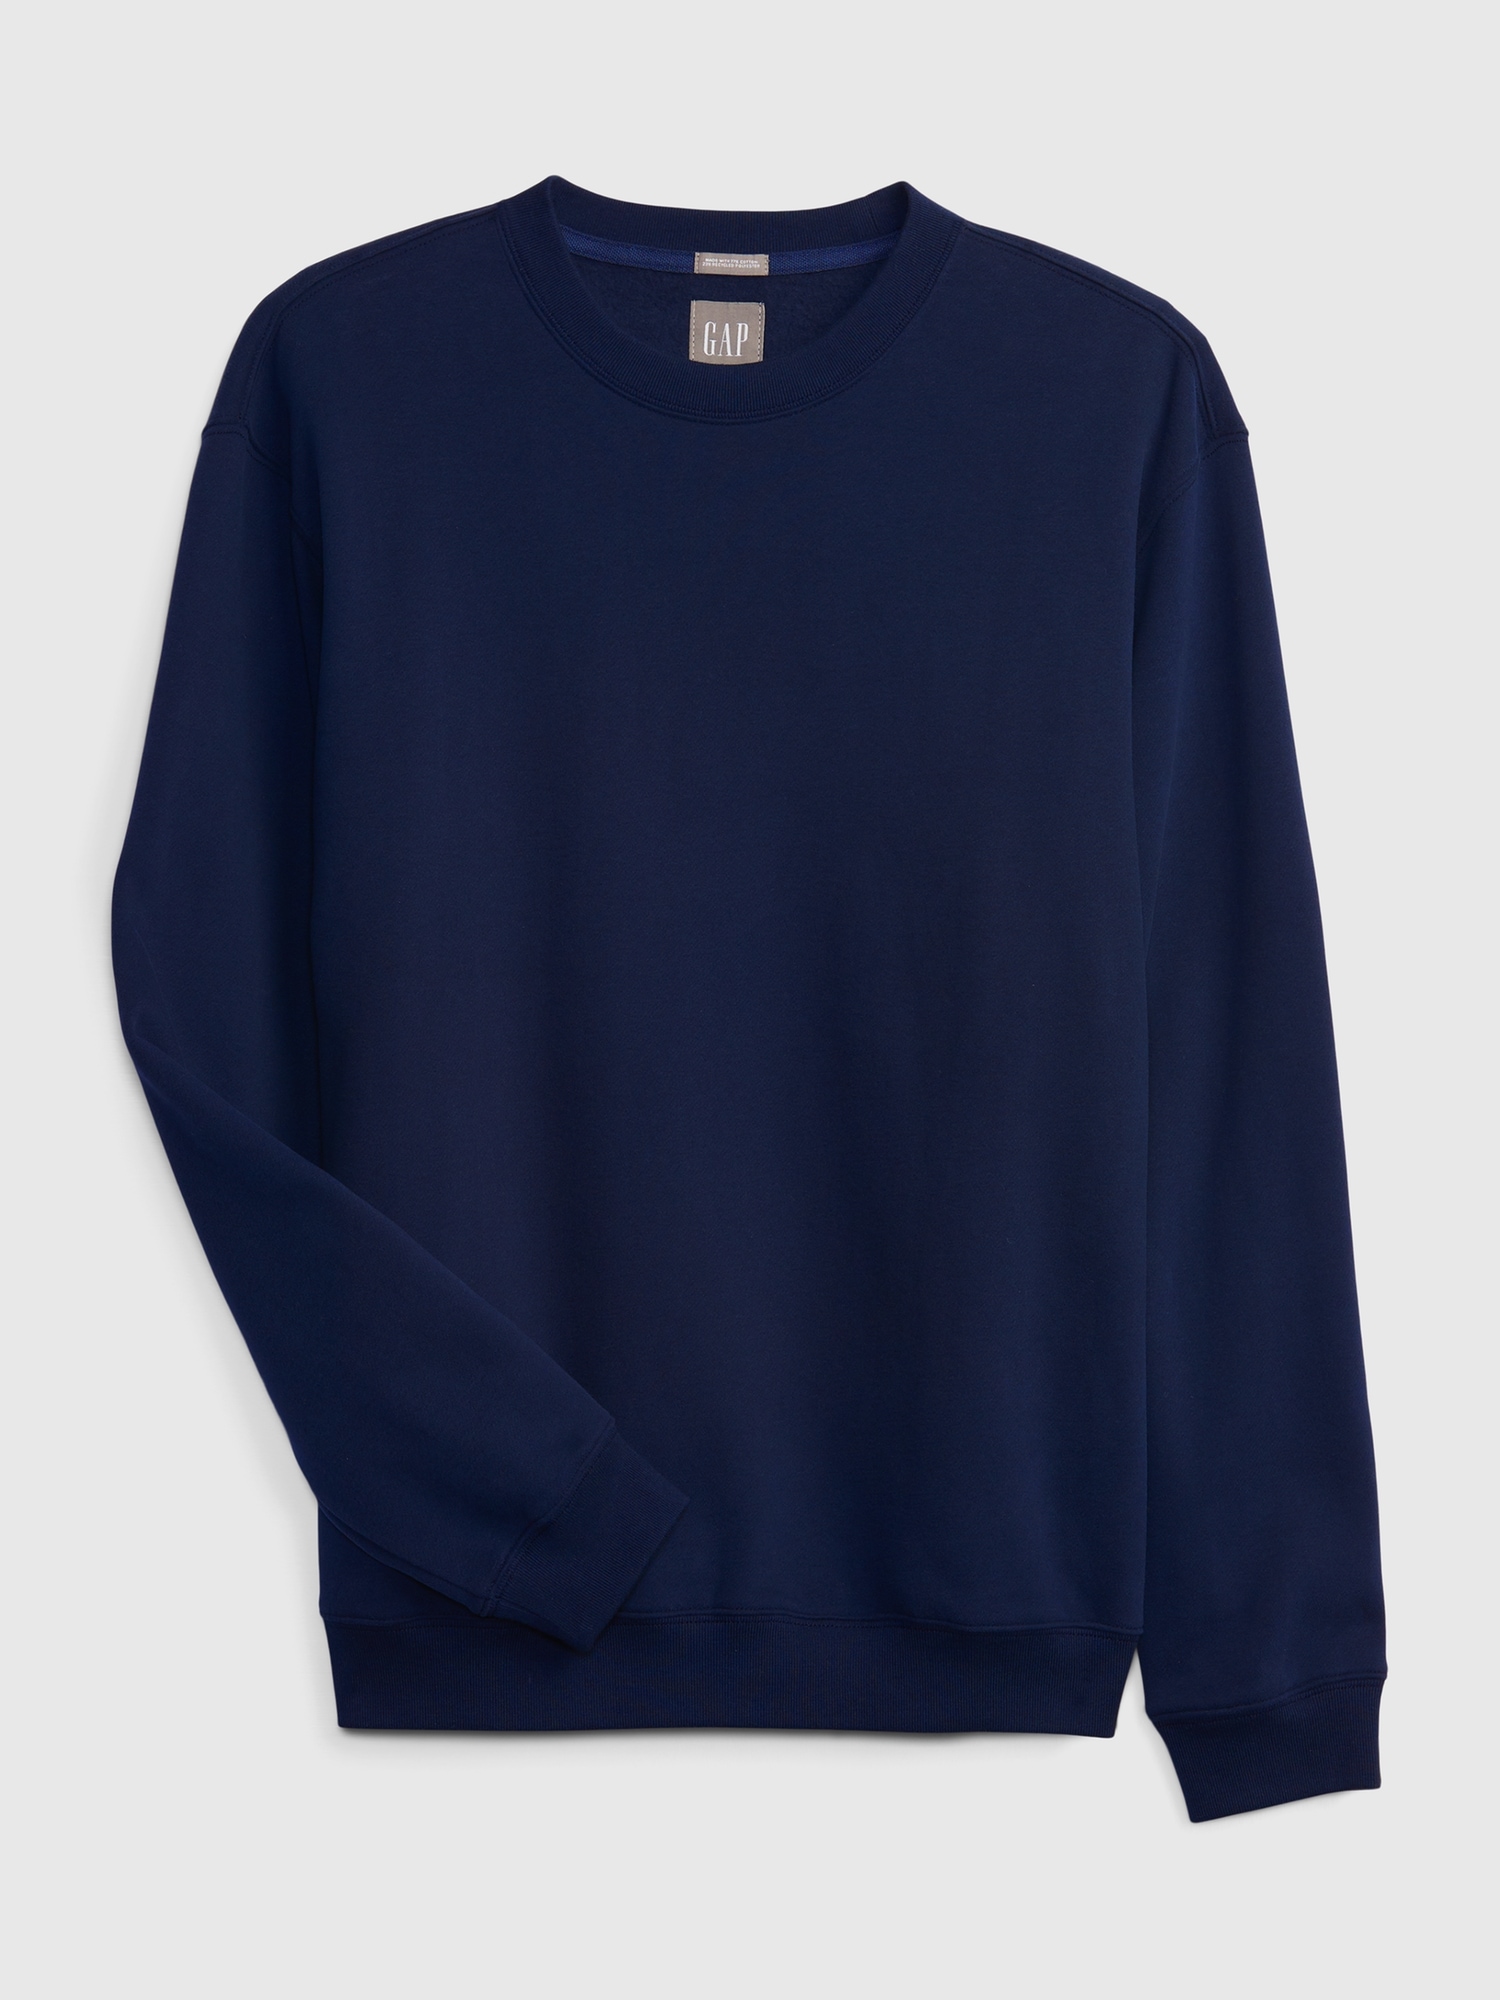 Men's Vintage Soft Crewneck Sweatshirt by Gap Tapestry Navy Size L